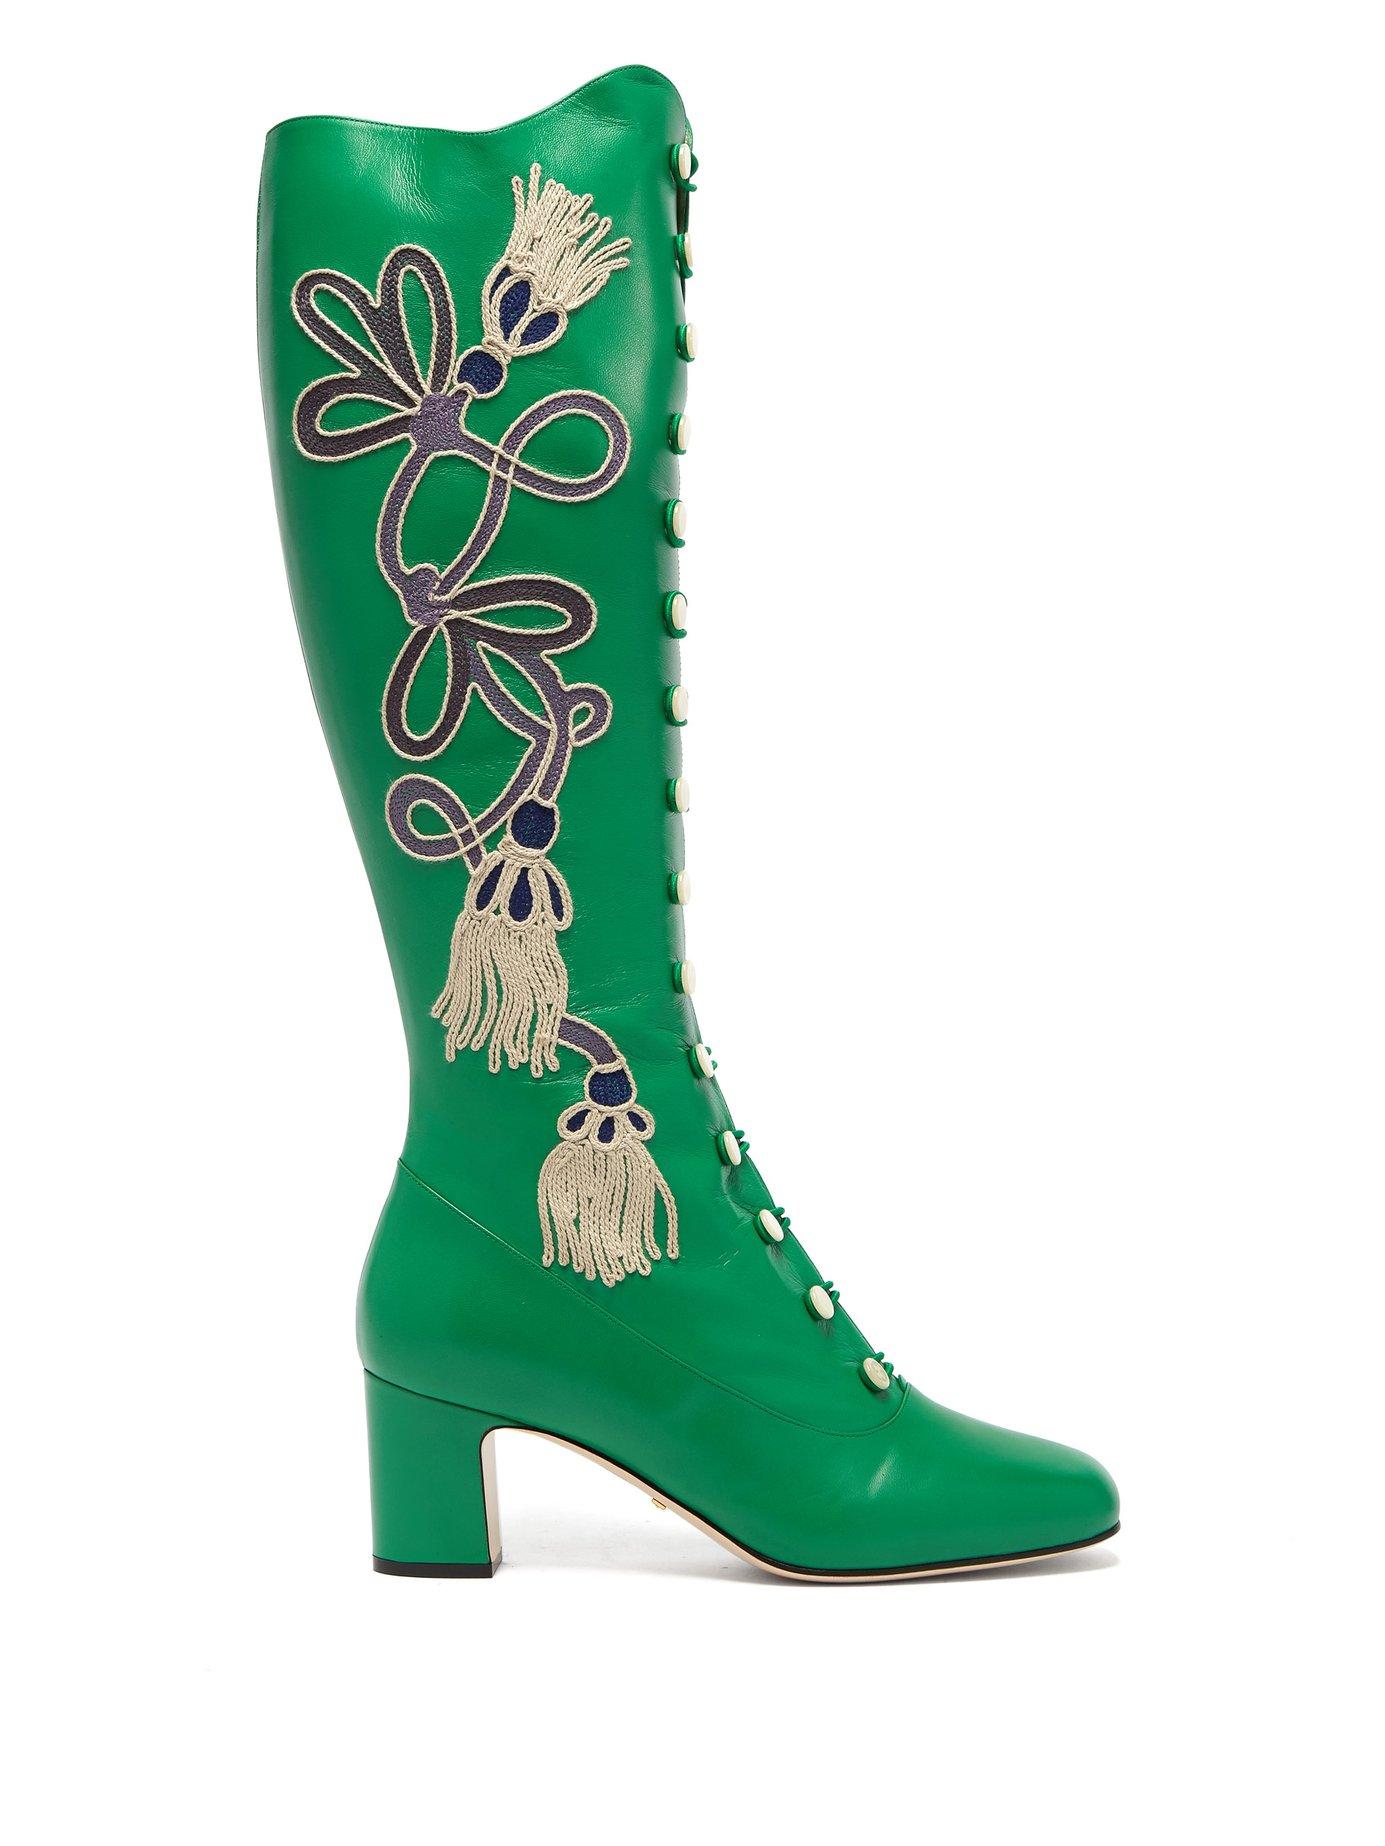 green gucci boots